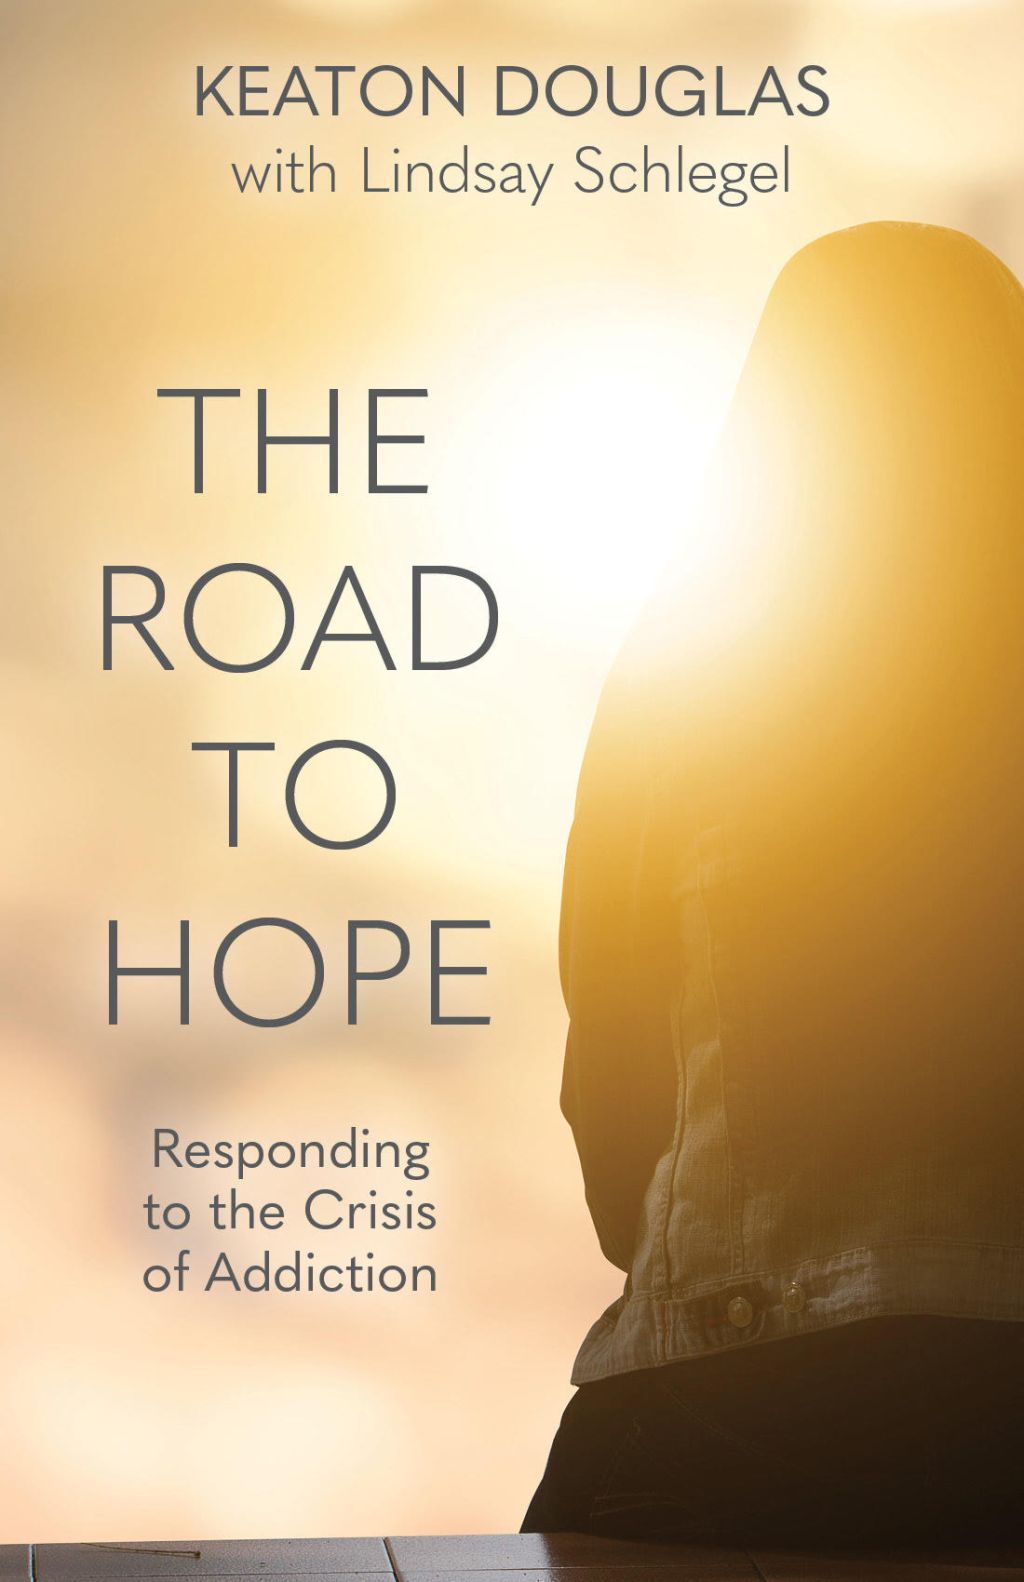 Road-to-hope-crisis-addiction